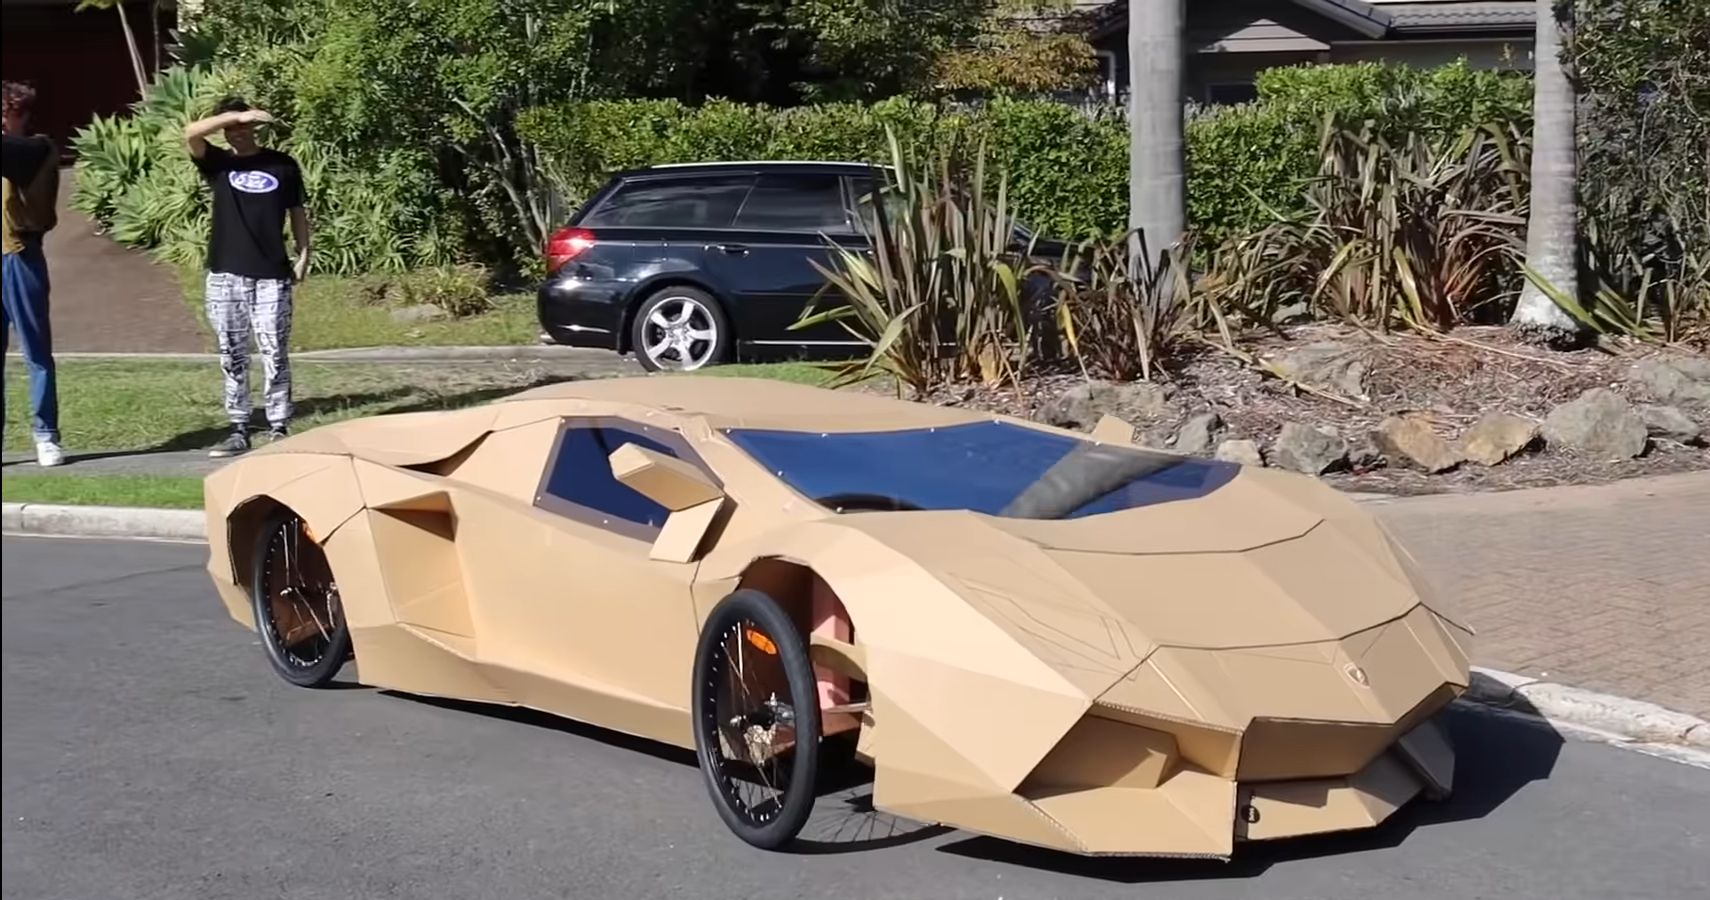 Drivable Lamborghini Replica Made From Cardboard Sells For 10k